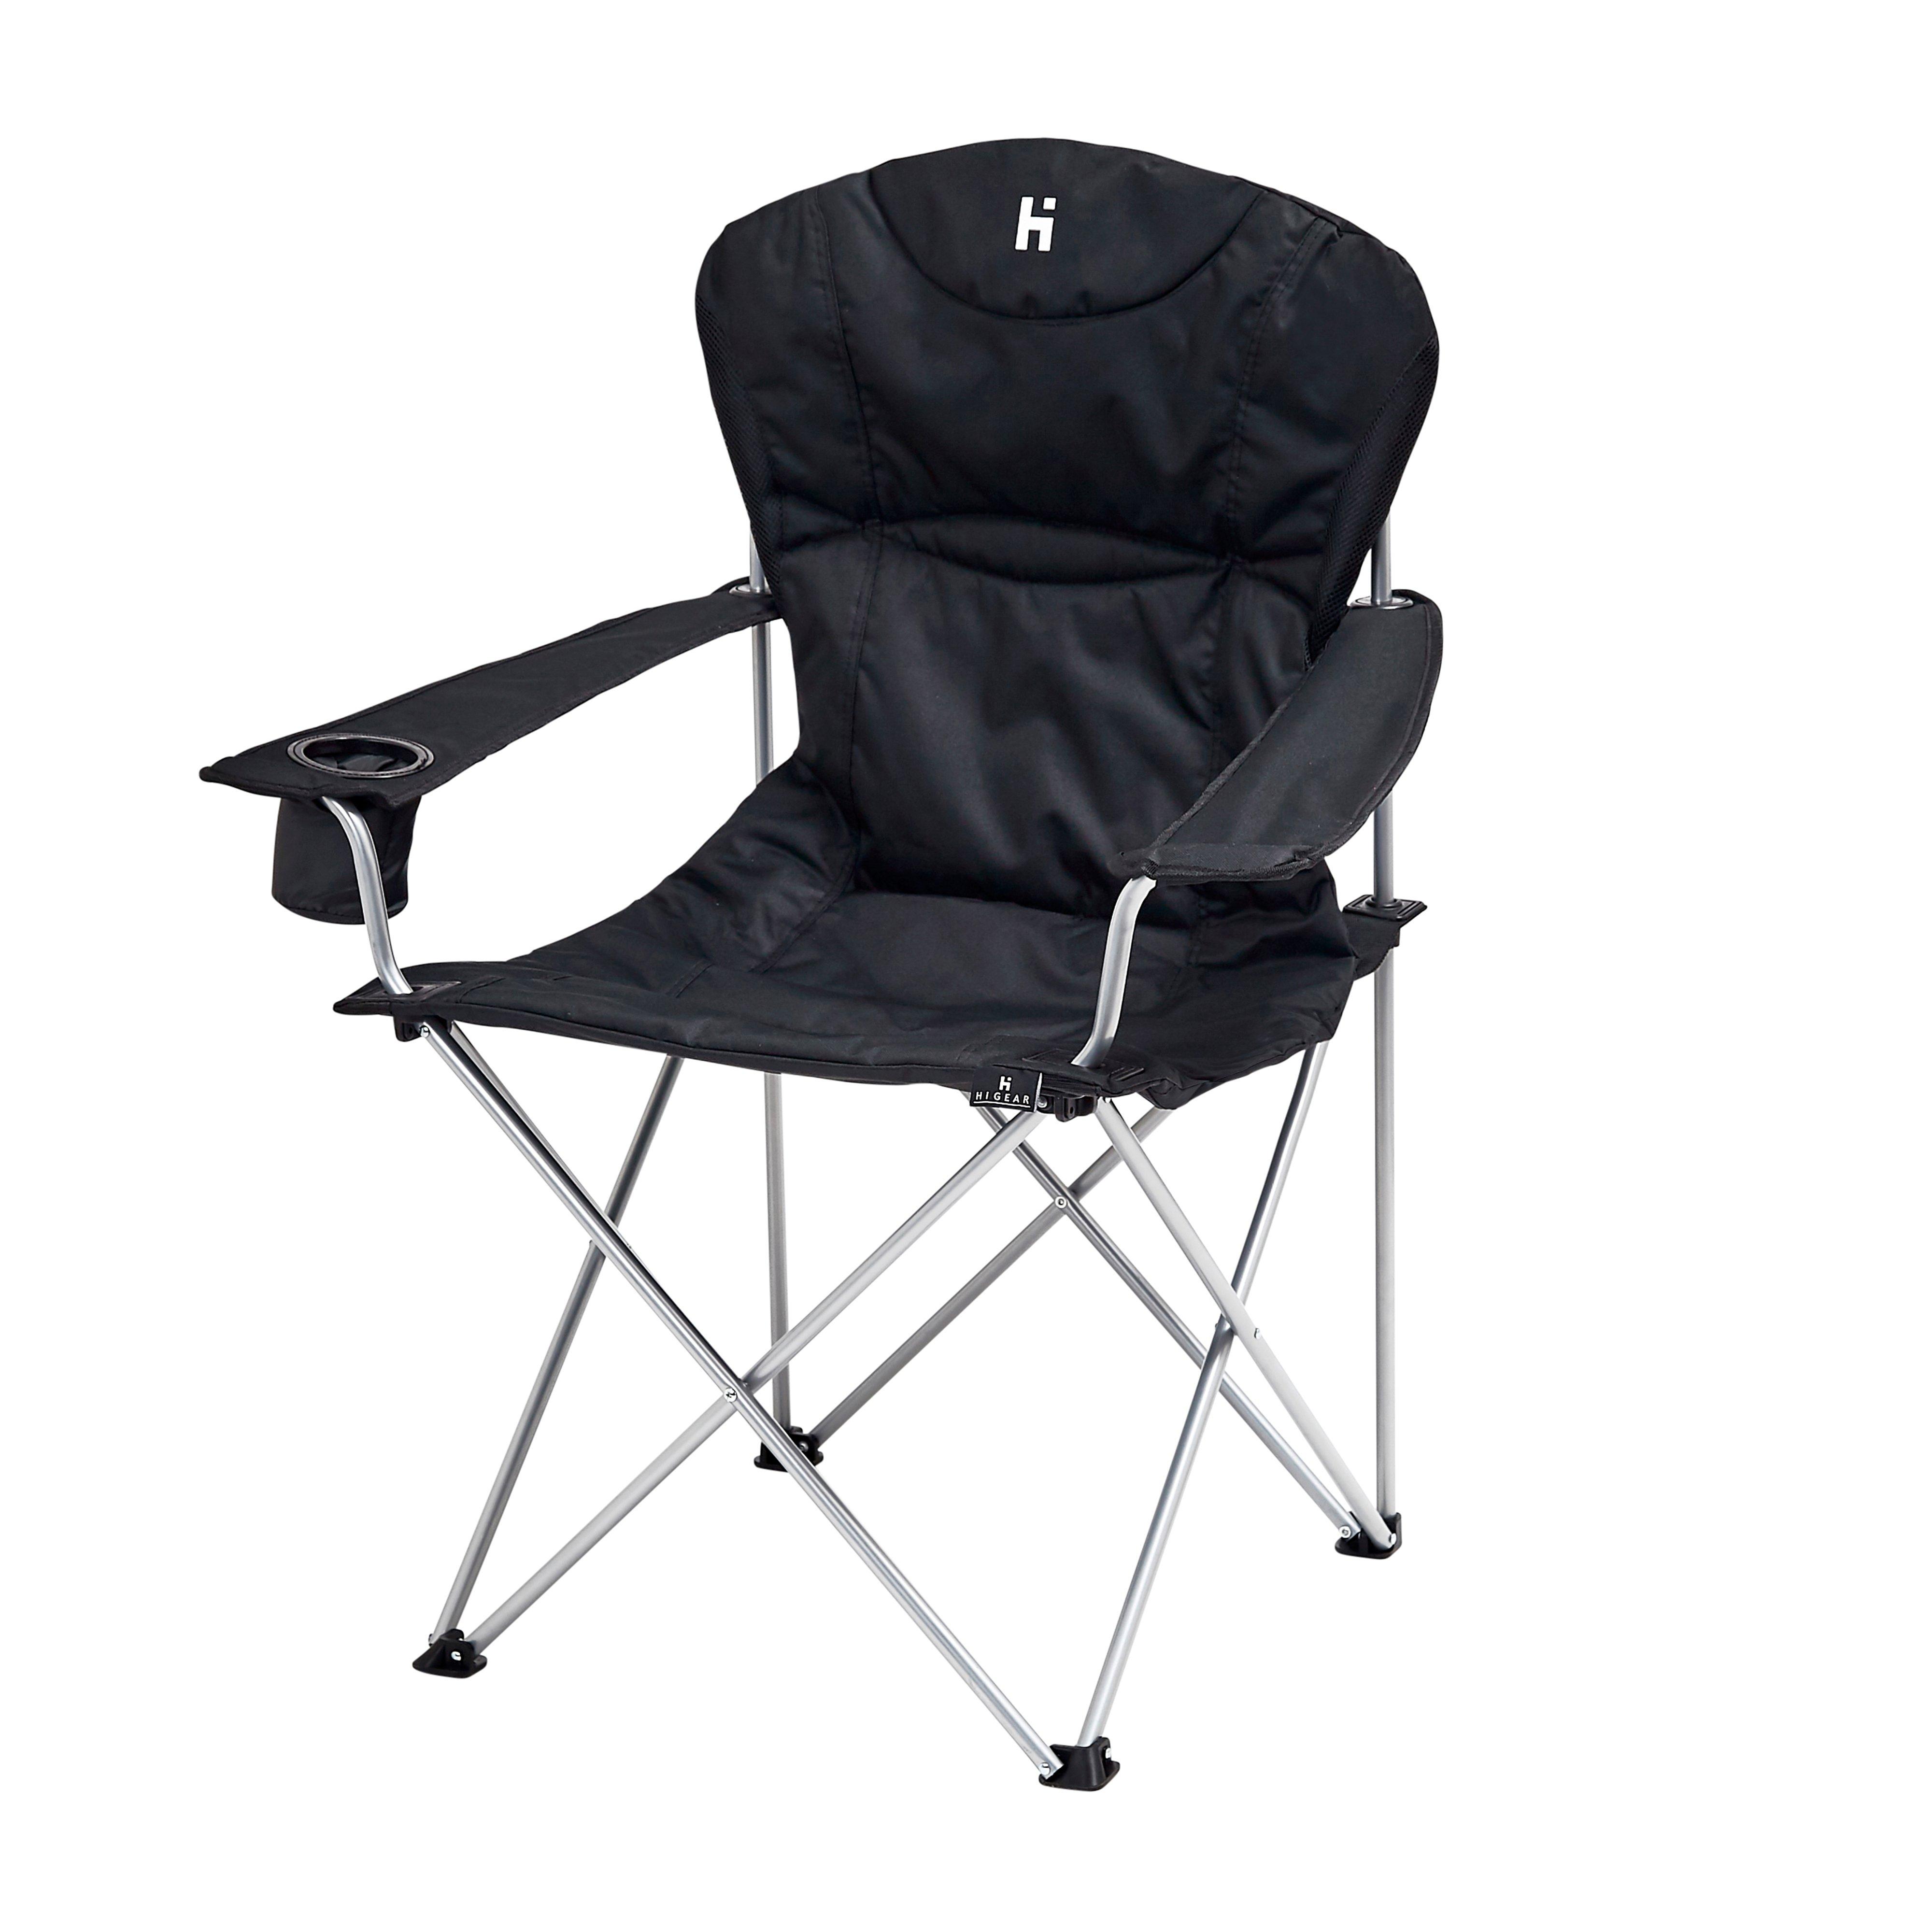 hi gear kentucky camping chair